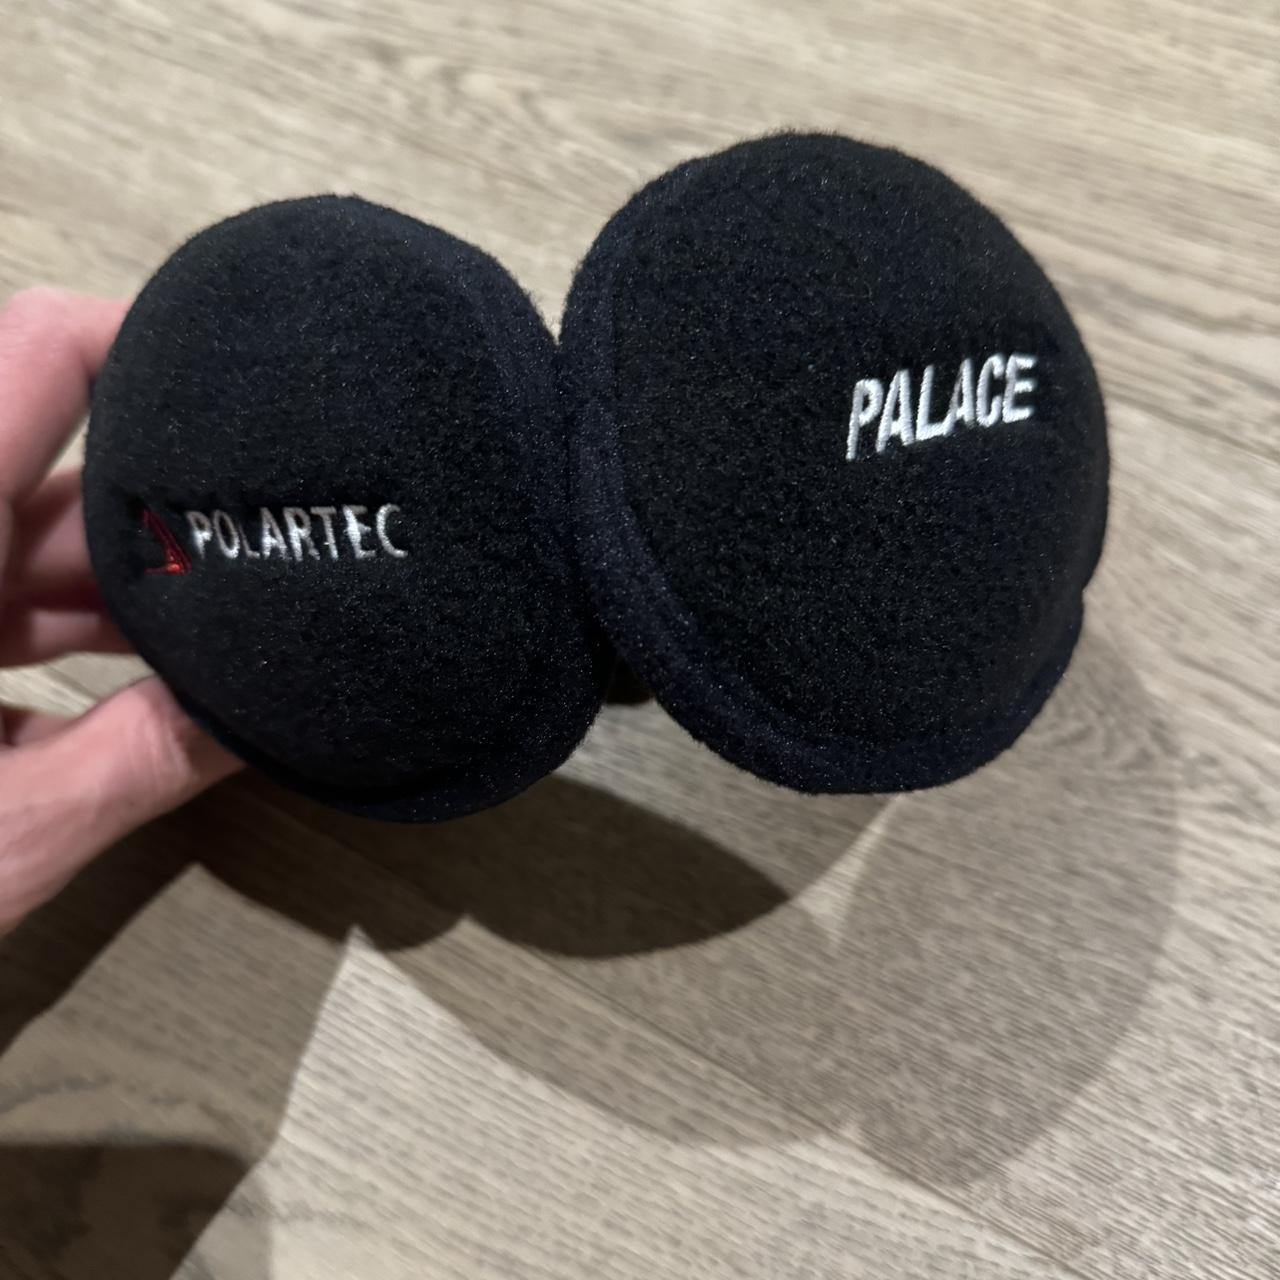 Palace Polartec Earwarmer Black - イヤマフラー